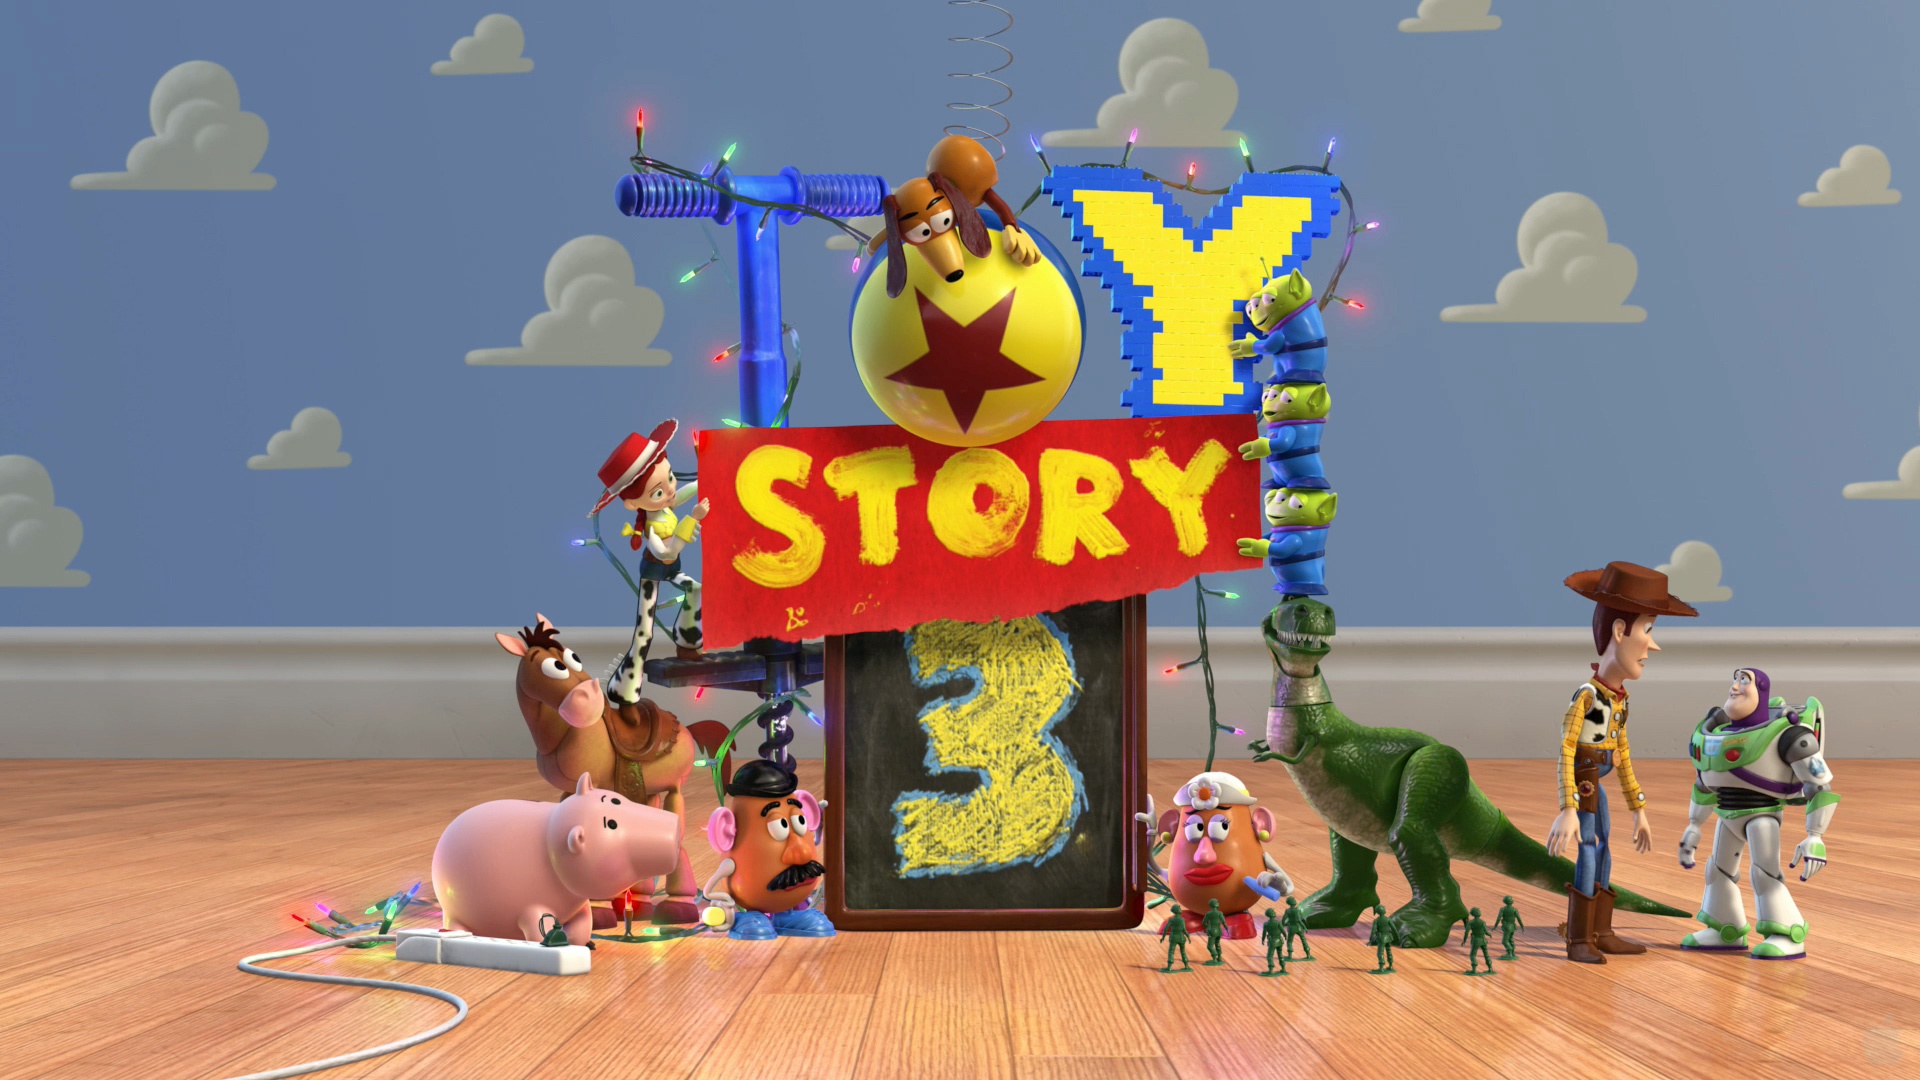 Toy Story 3 - Toy Story 3 Wallpaper (36440537) - Fanpop